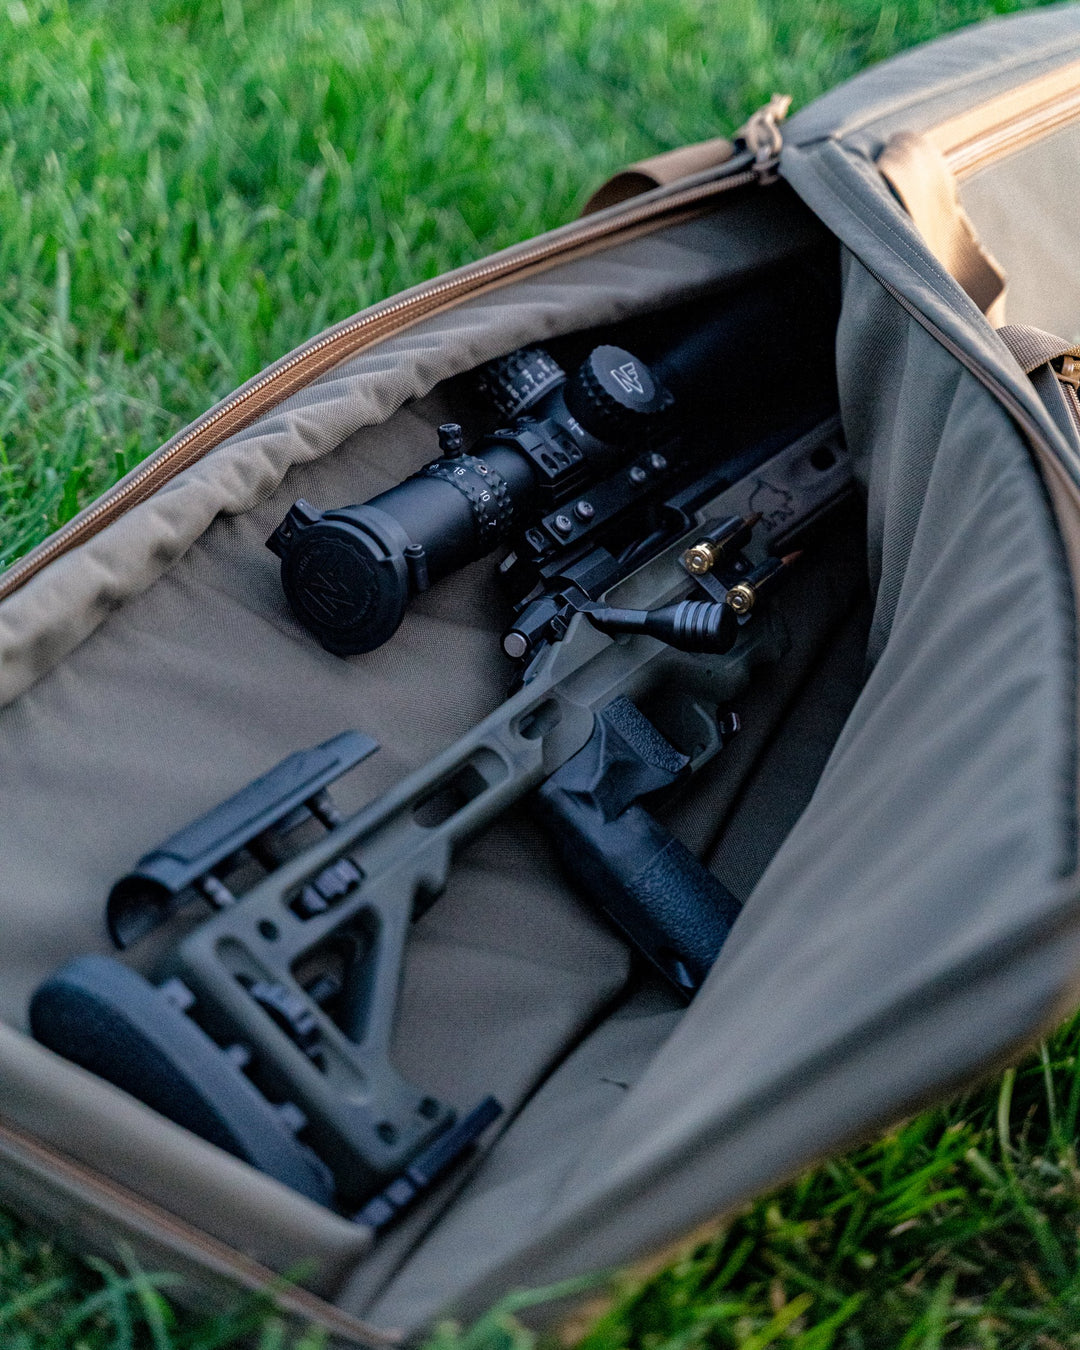 Bag open with rifle inside - Armageddon Gear 52 Inch Precision Rifle Case - Sharps Mountain Outdoor Gear - Pigg River Precision